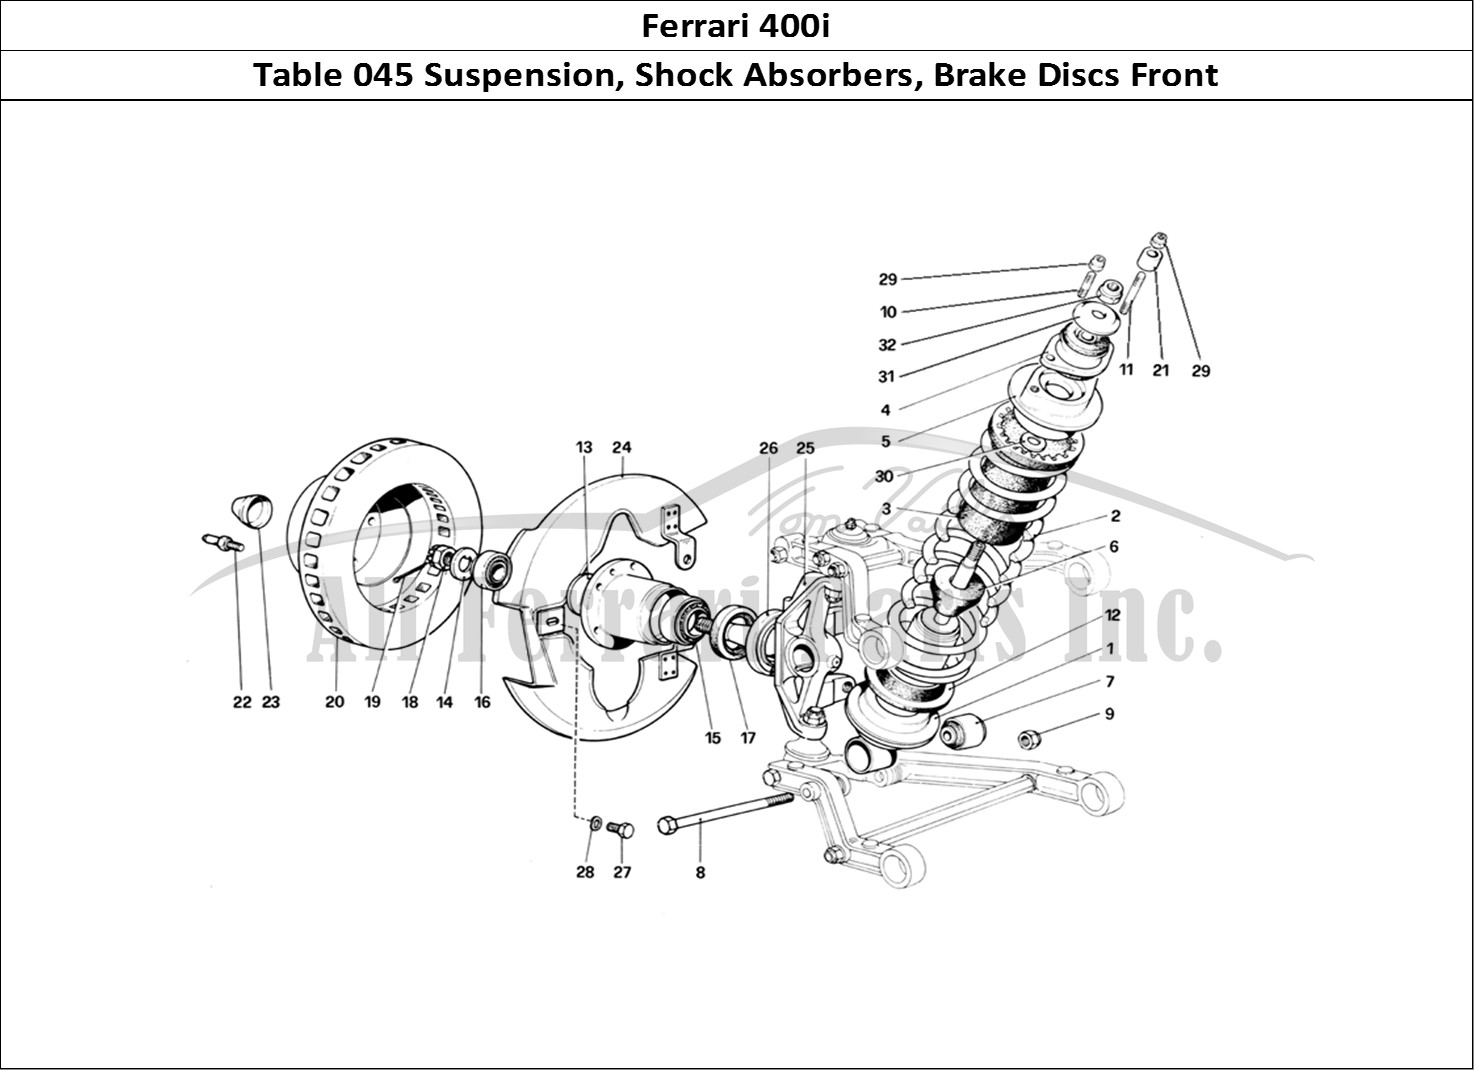 Ferrari Parts Ferrari 400i (1983 Mechanical) Page 045 Front Suspension - Shock